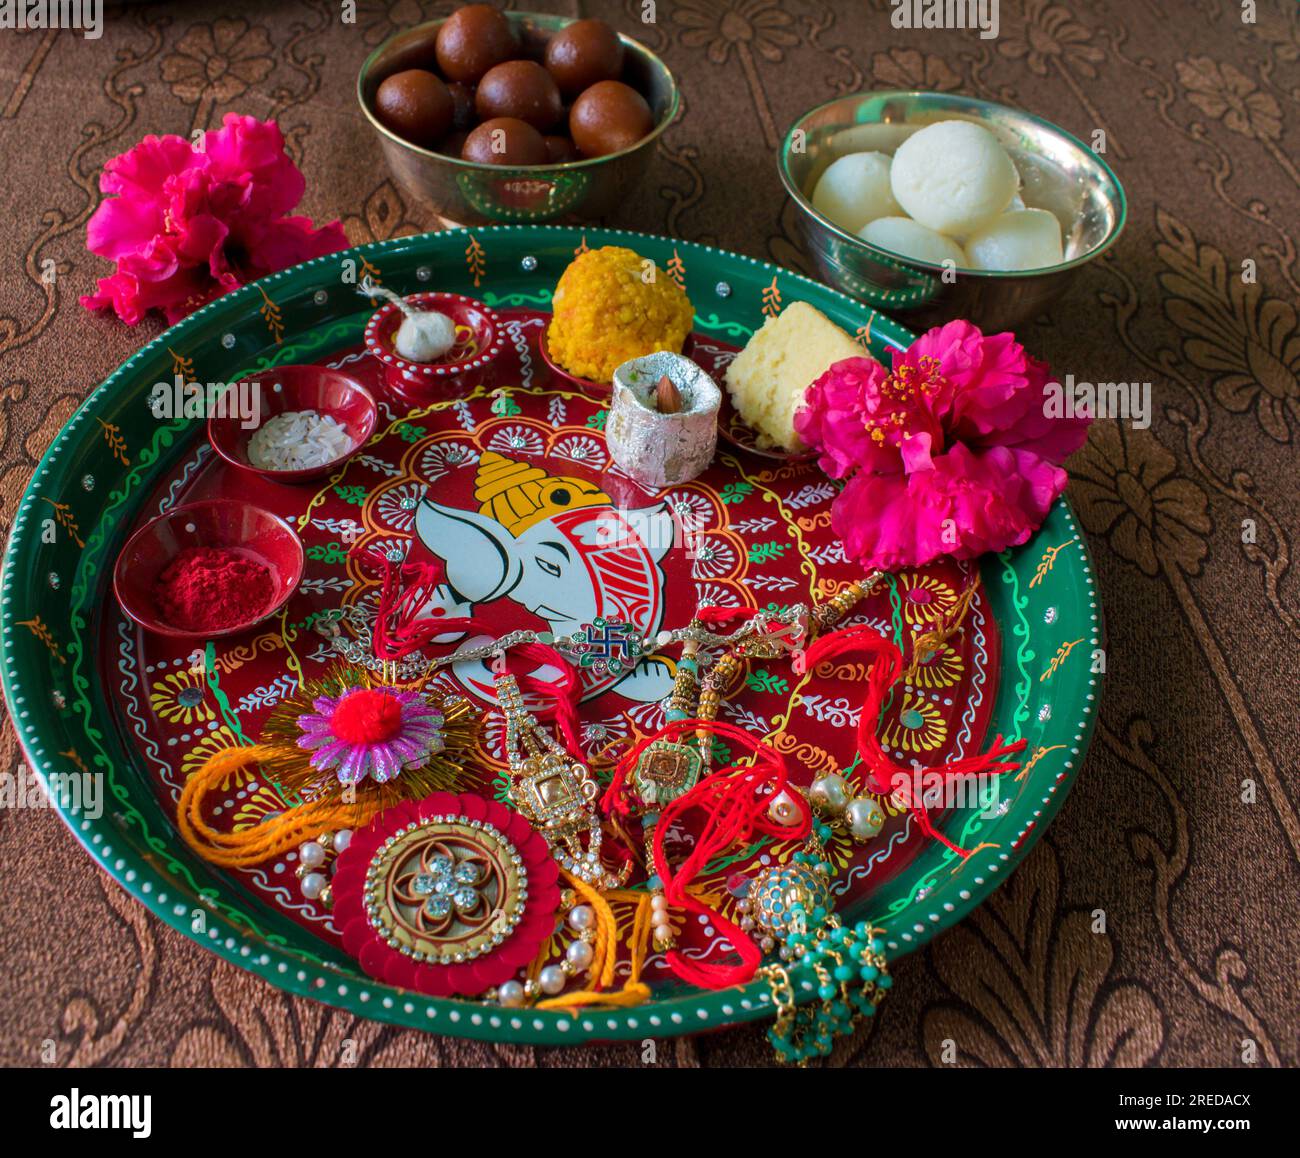 Decorate Rakhi plate on Rakshabandhan like this wish for brother long life  and progress  Raksha Bandhan Thali रकषबधन पर इस तरह सजए रख क  थल कर भई क लब उमर और